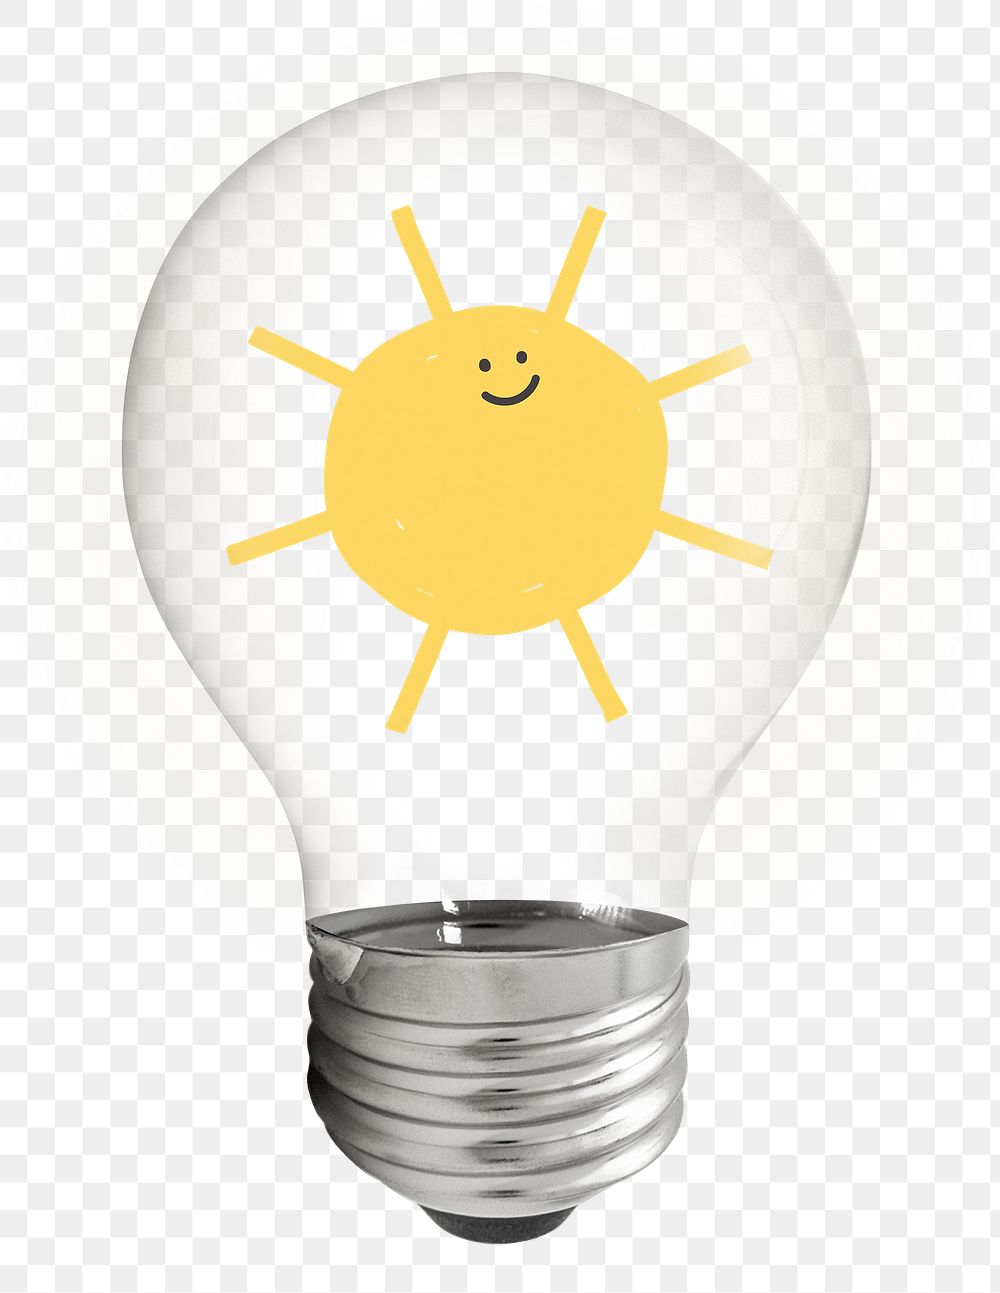 Sun doodle png sticker, light bulb weather collage on transparent background